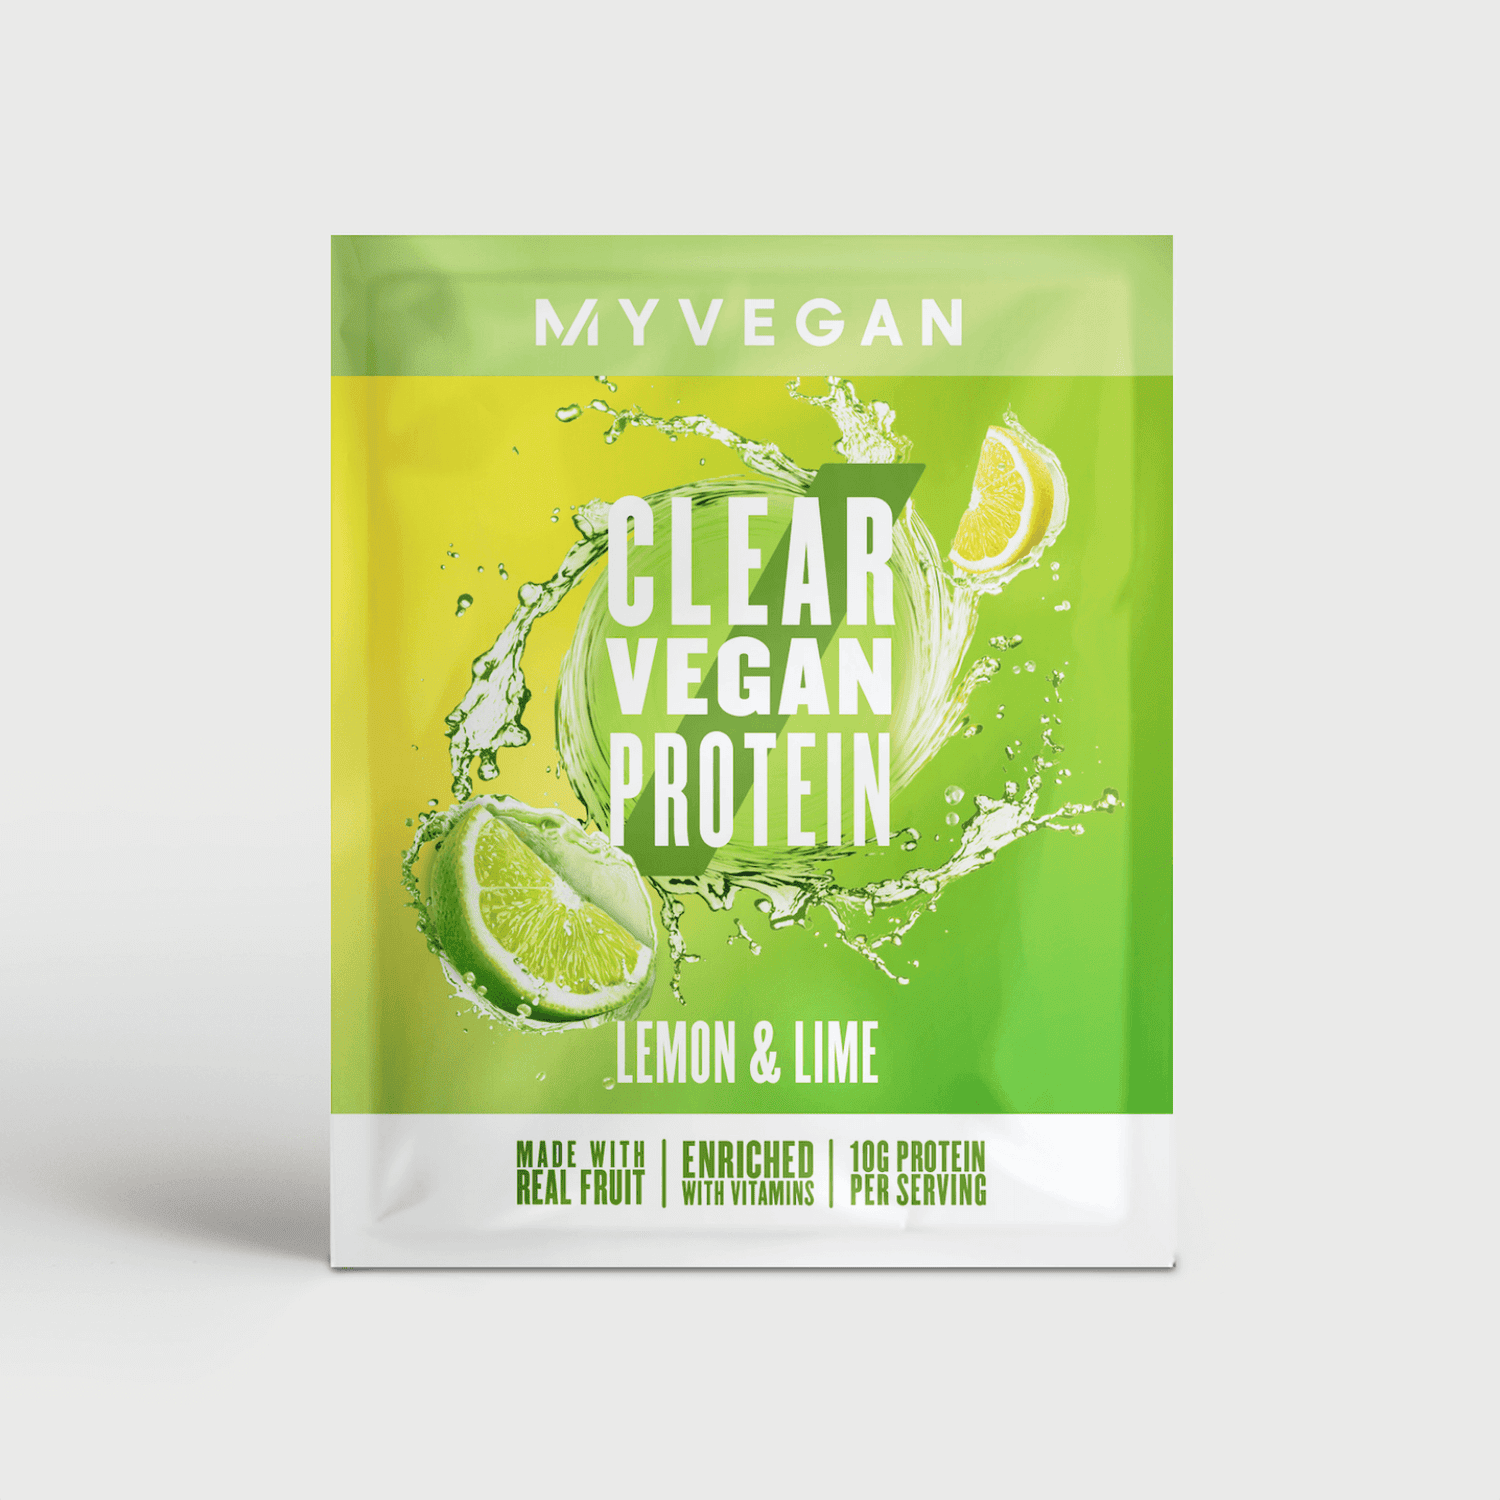 Myvegan Clear Vegan Protein, 16g (Sample) - 16g - 柠檬青柠檬味